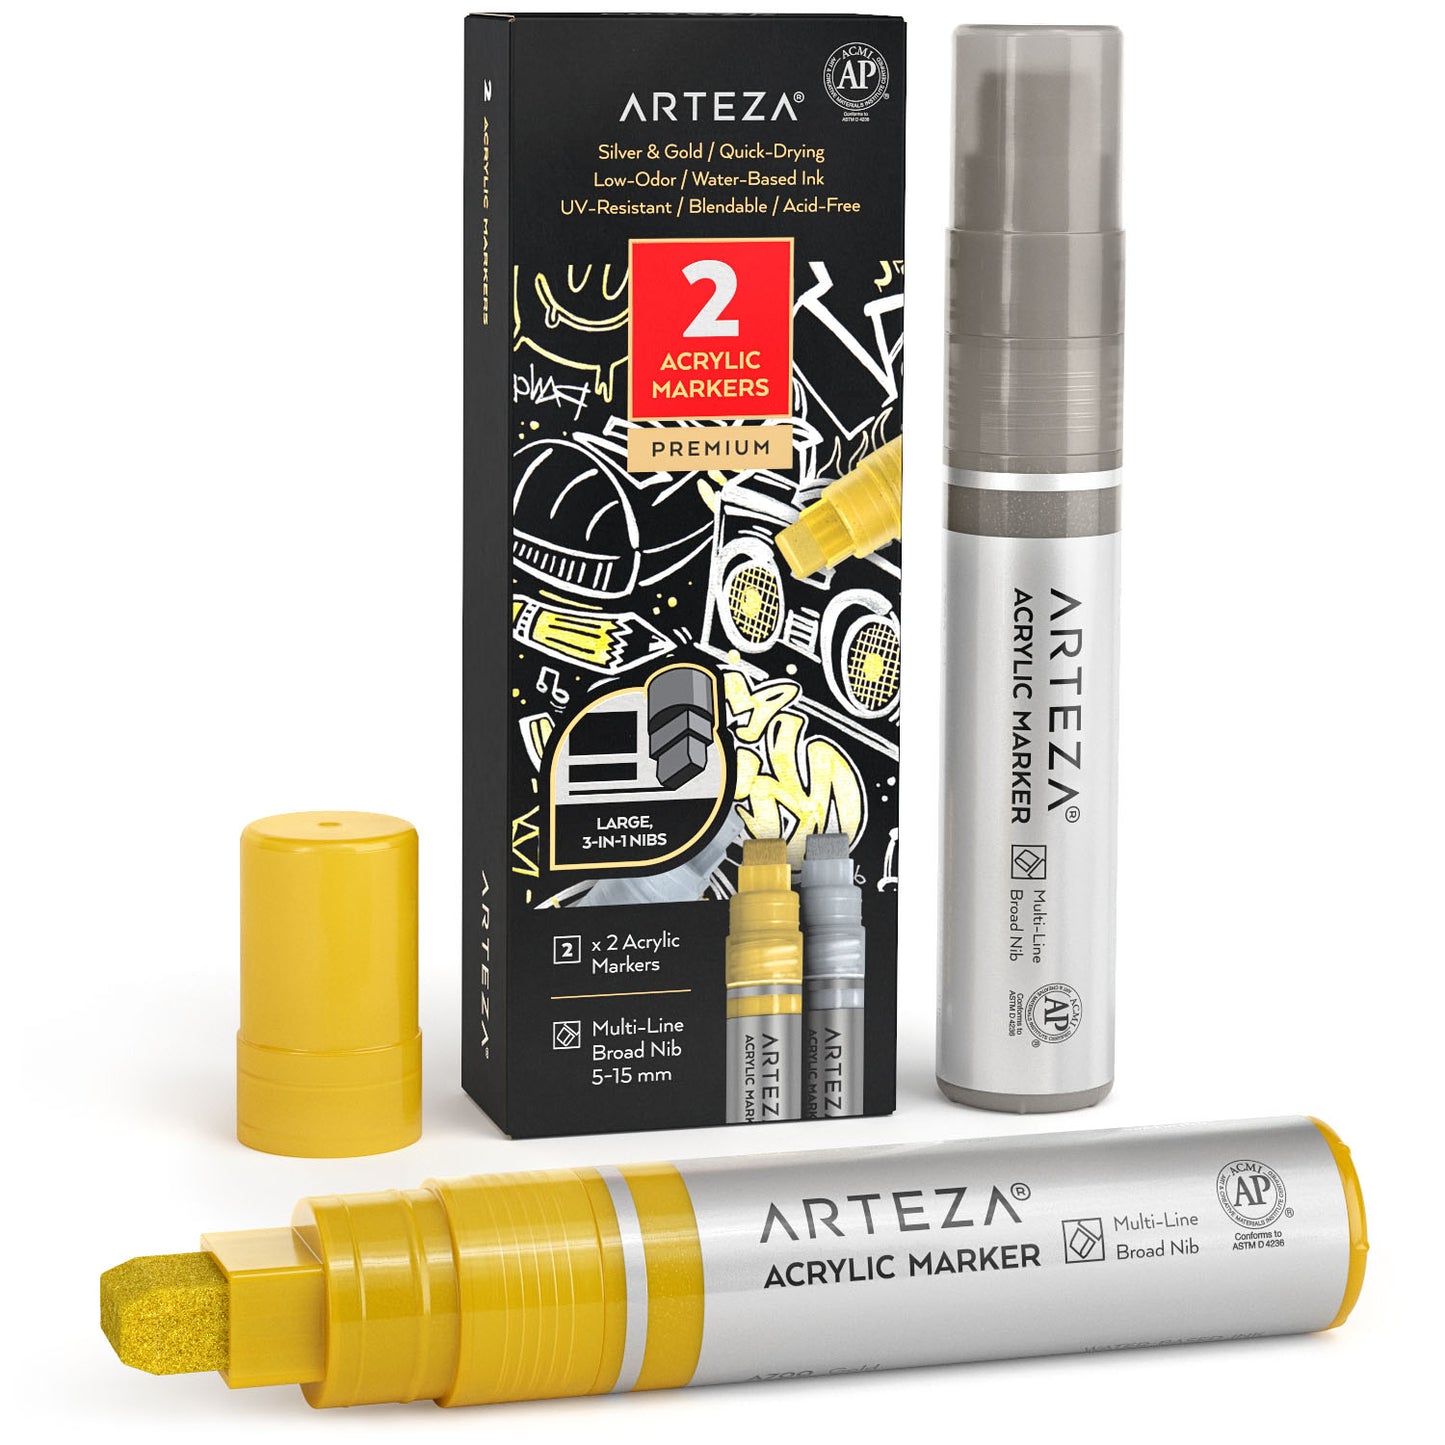 Arteza - 💥💥NEW Product Alert!💥💥 Arteza Acrylic Markers are